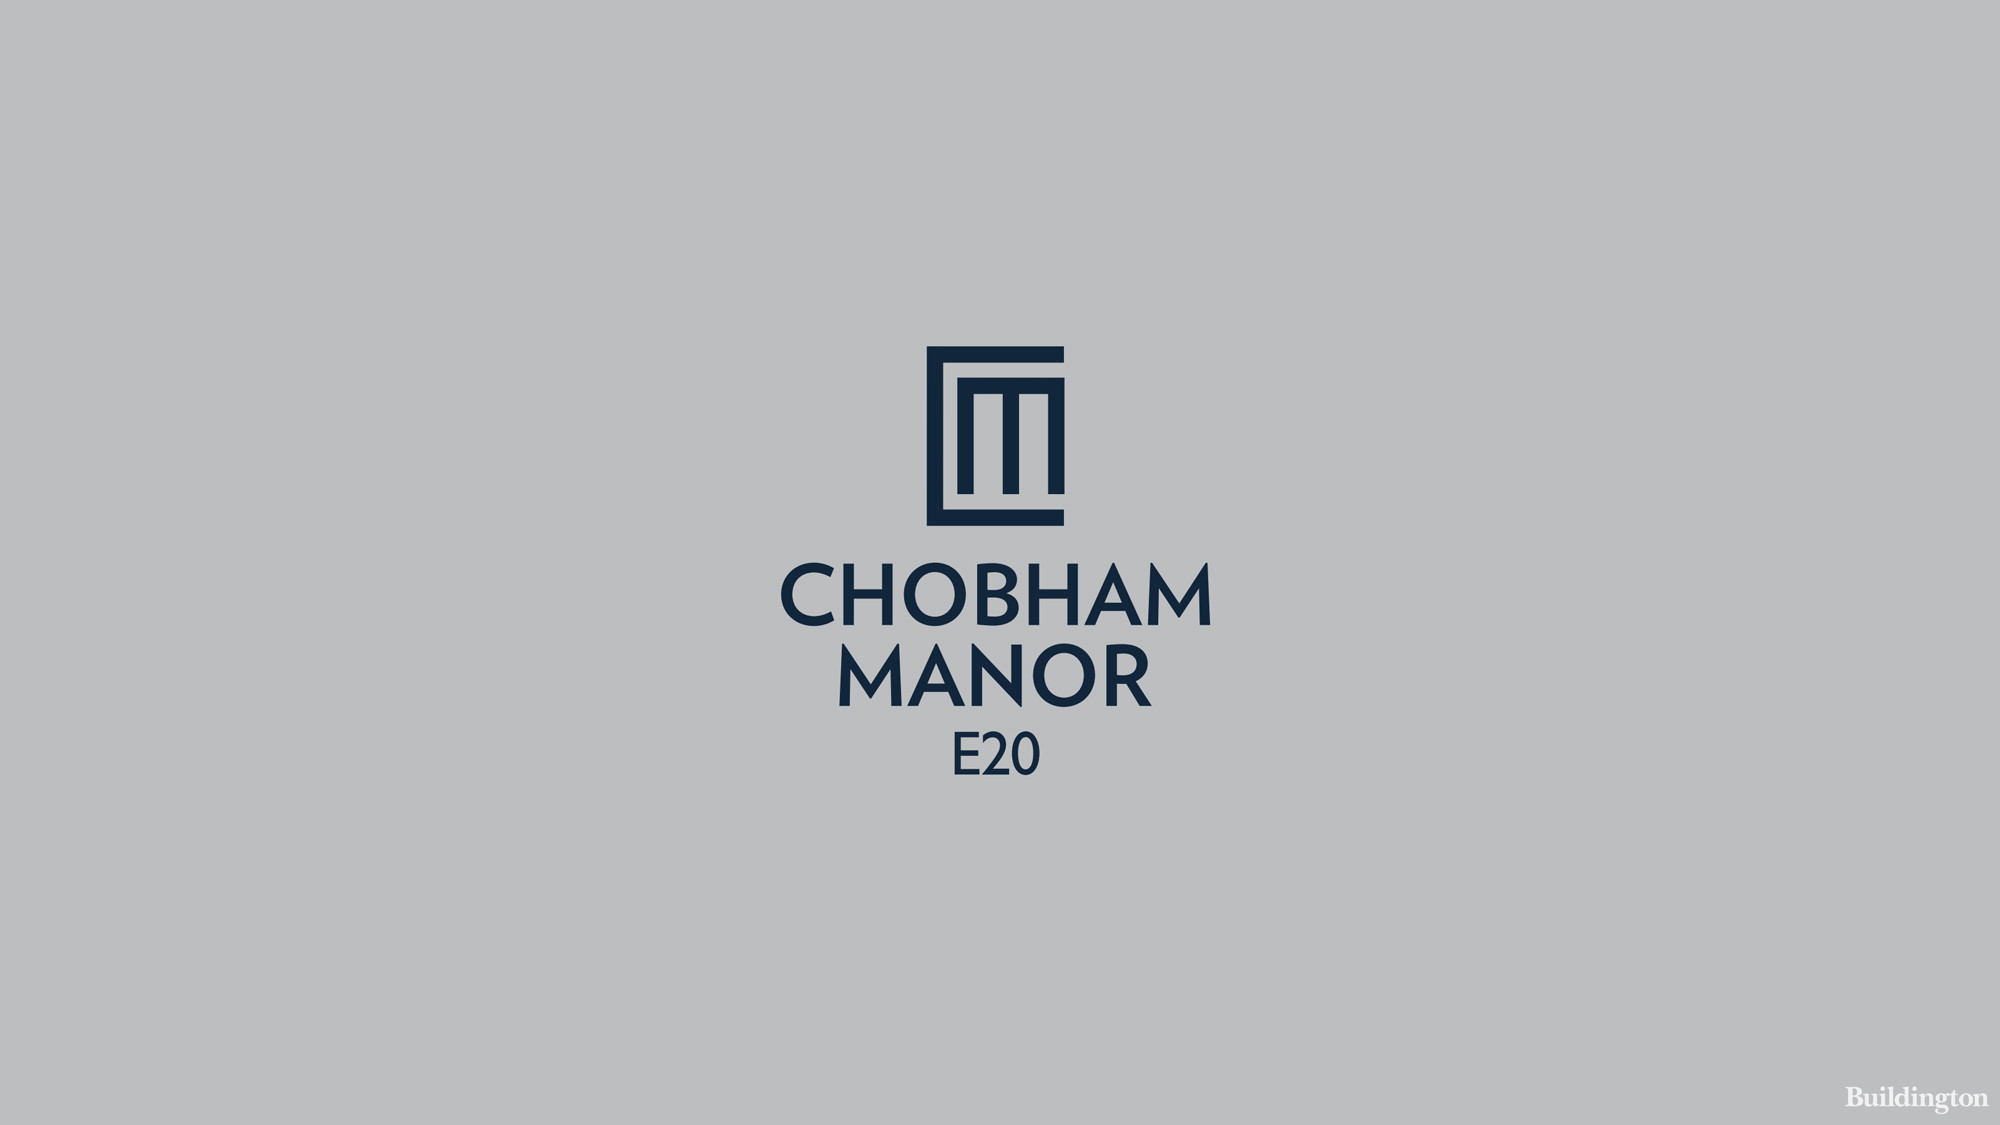 Chobham Manor development logo